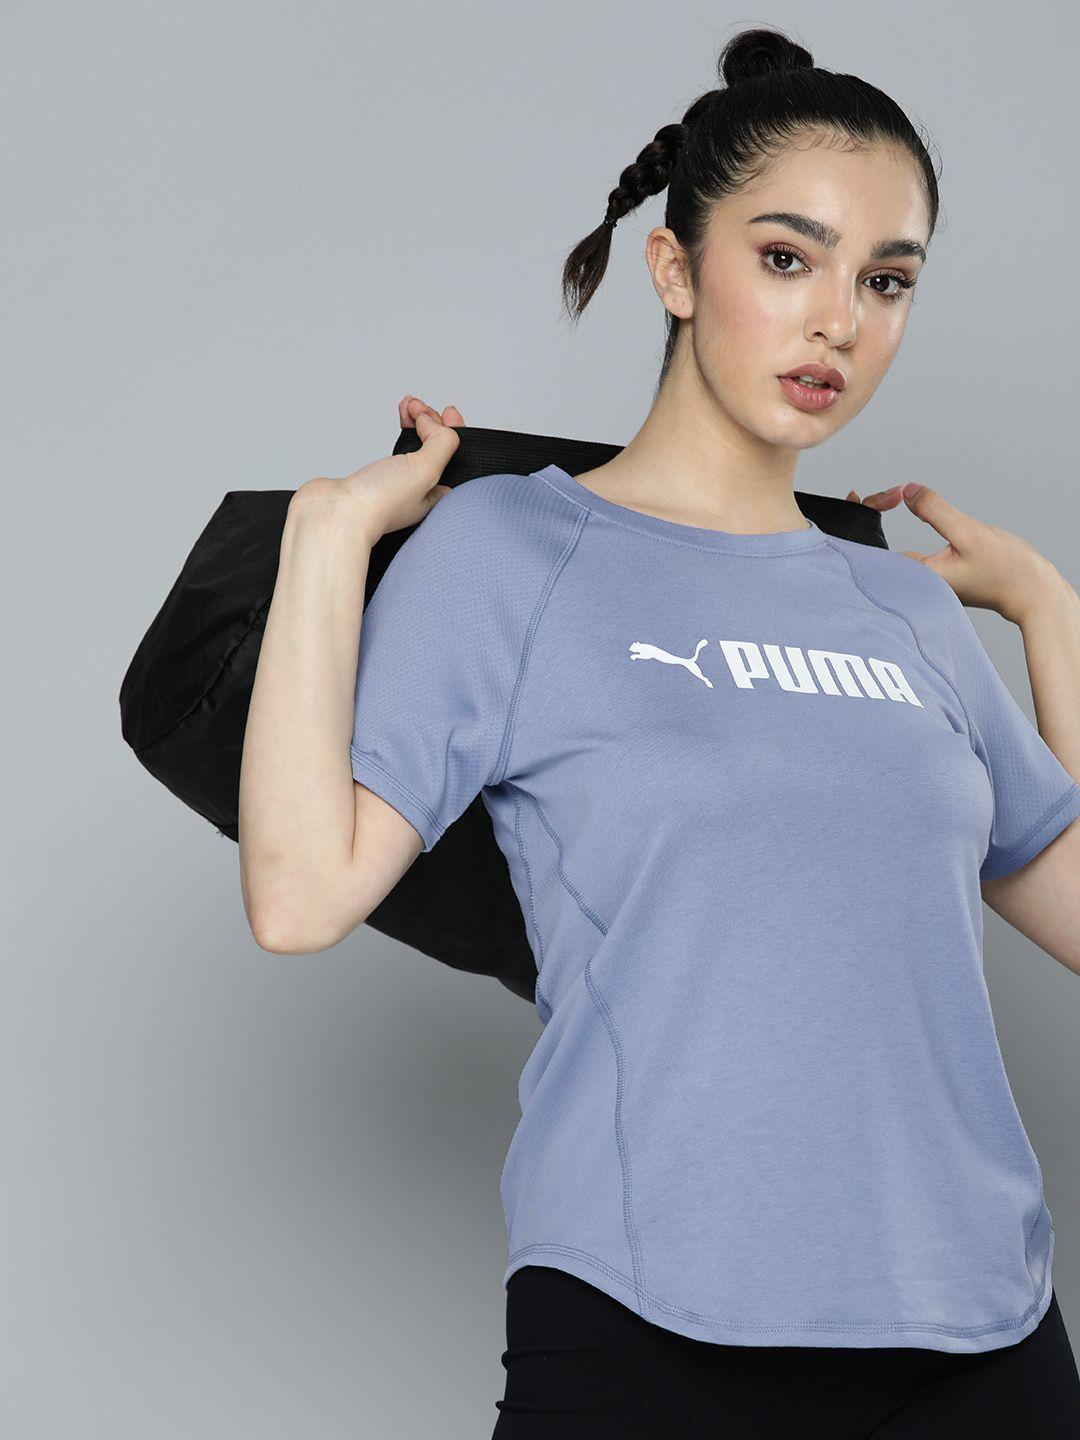 puma brand logo printed drycell fit training t-shirt